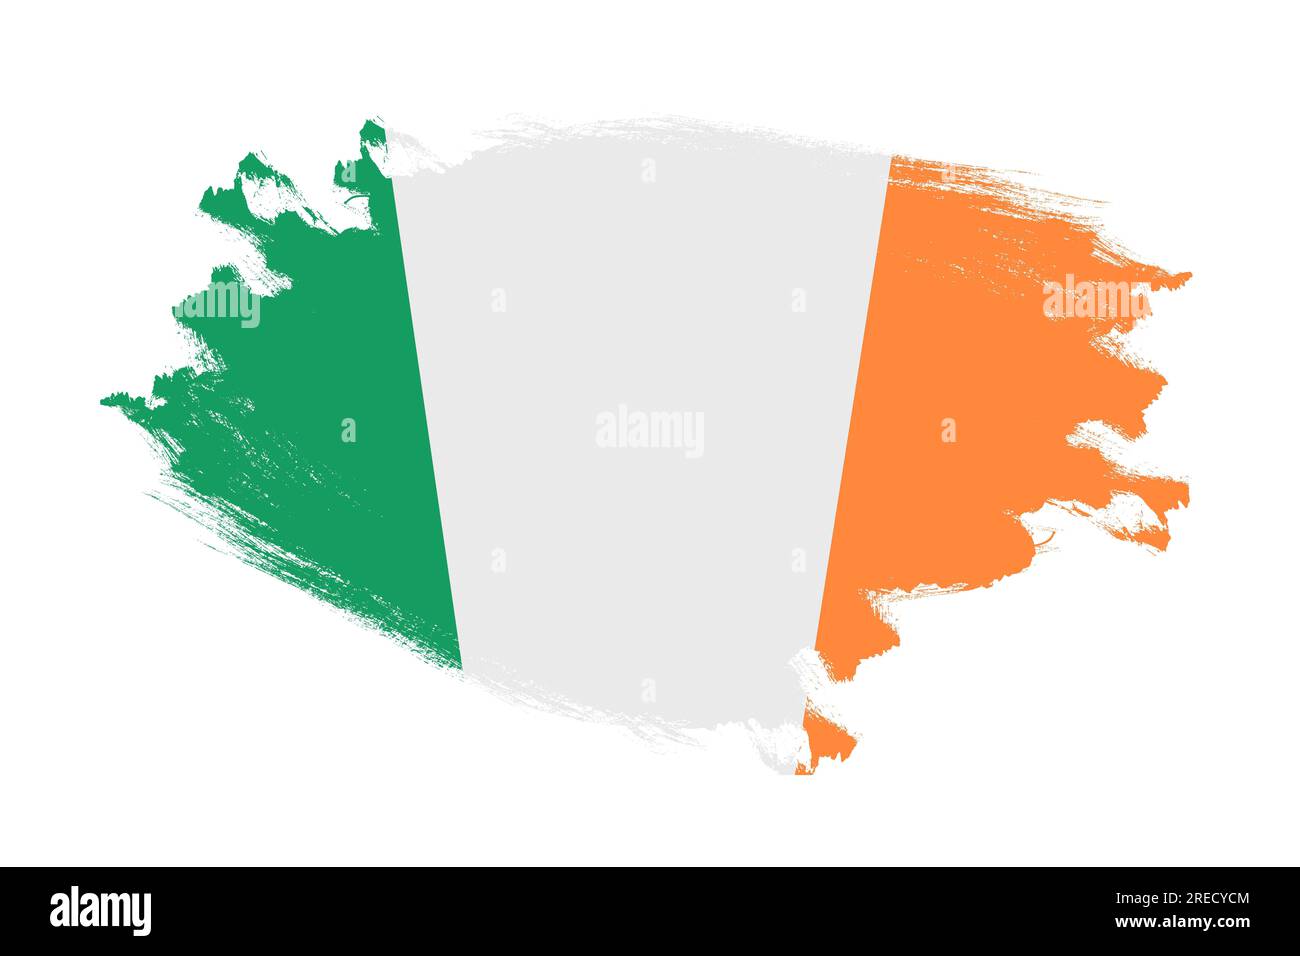 Abstract stroke brush textured national flag of Ireland on isolated white background Stock Photo